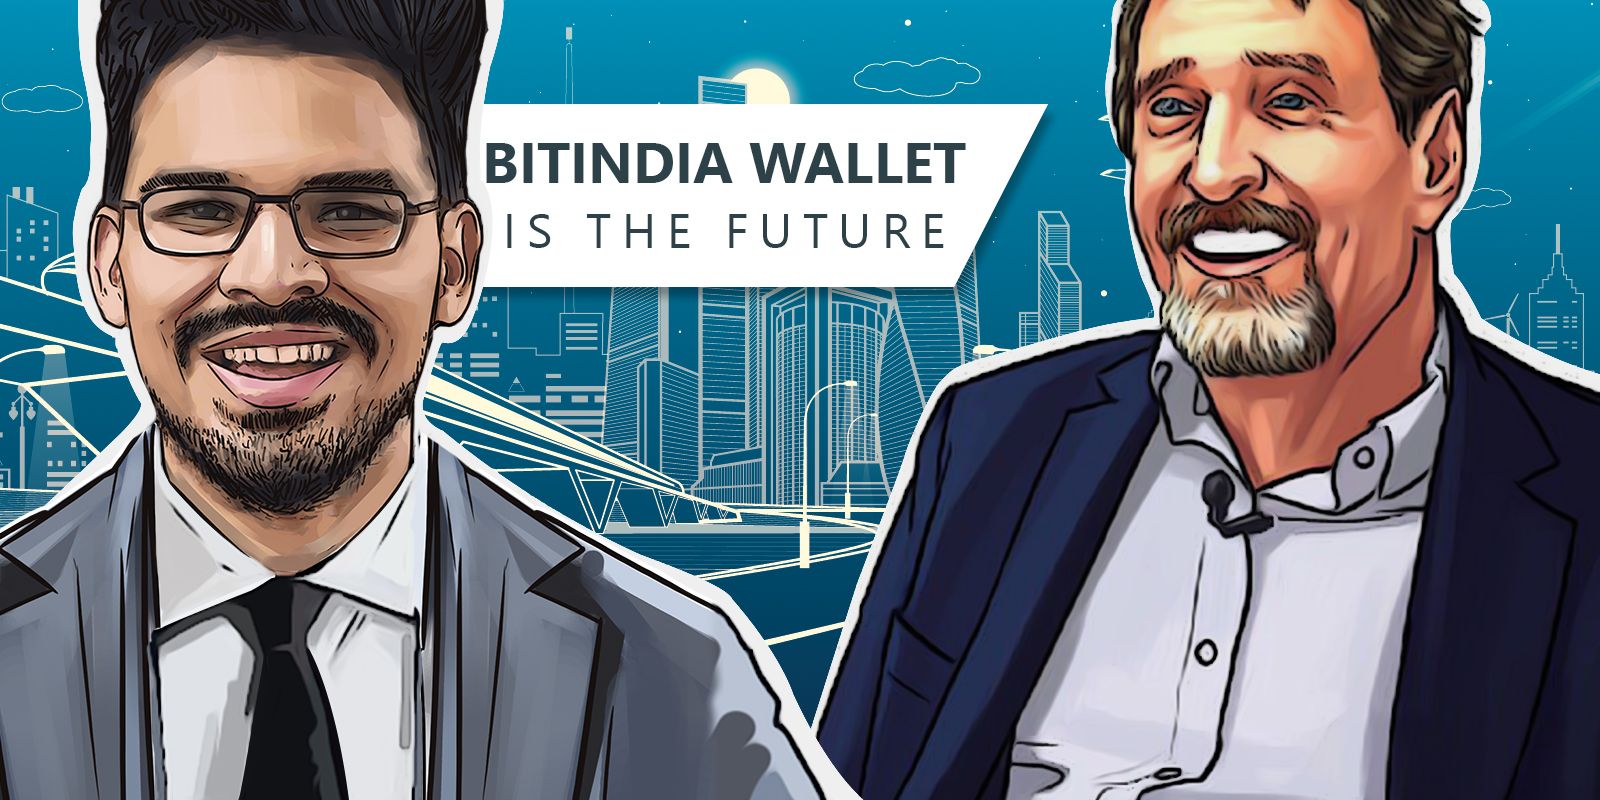 'Bitindia wallet is the future,' says CEO Sahil Kohli